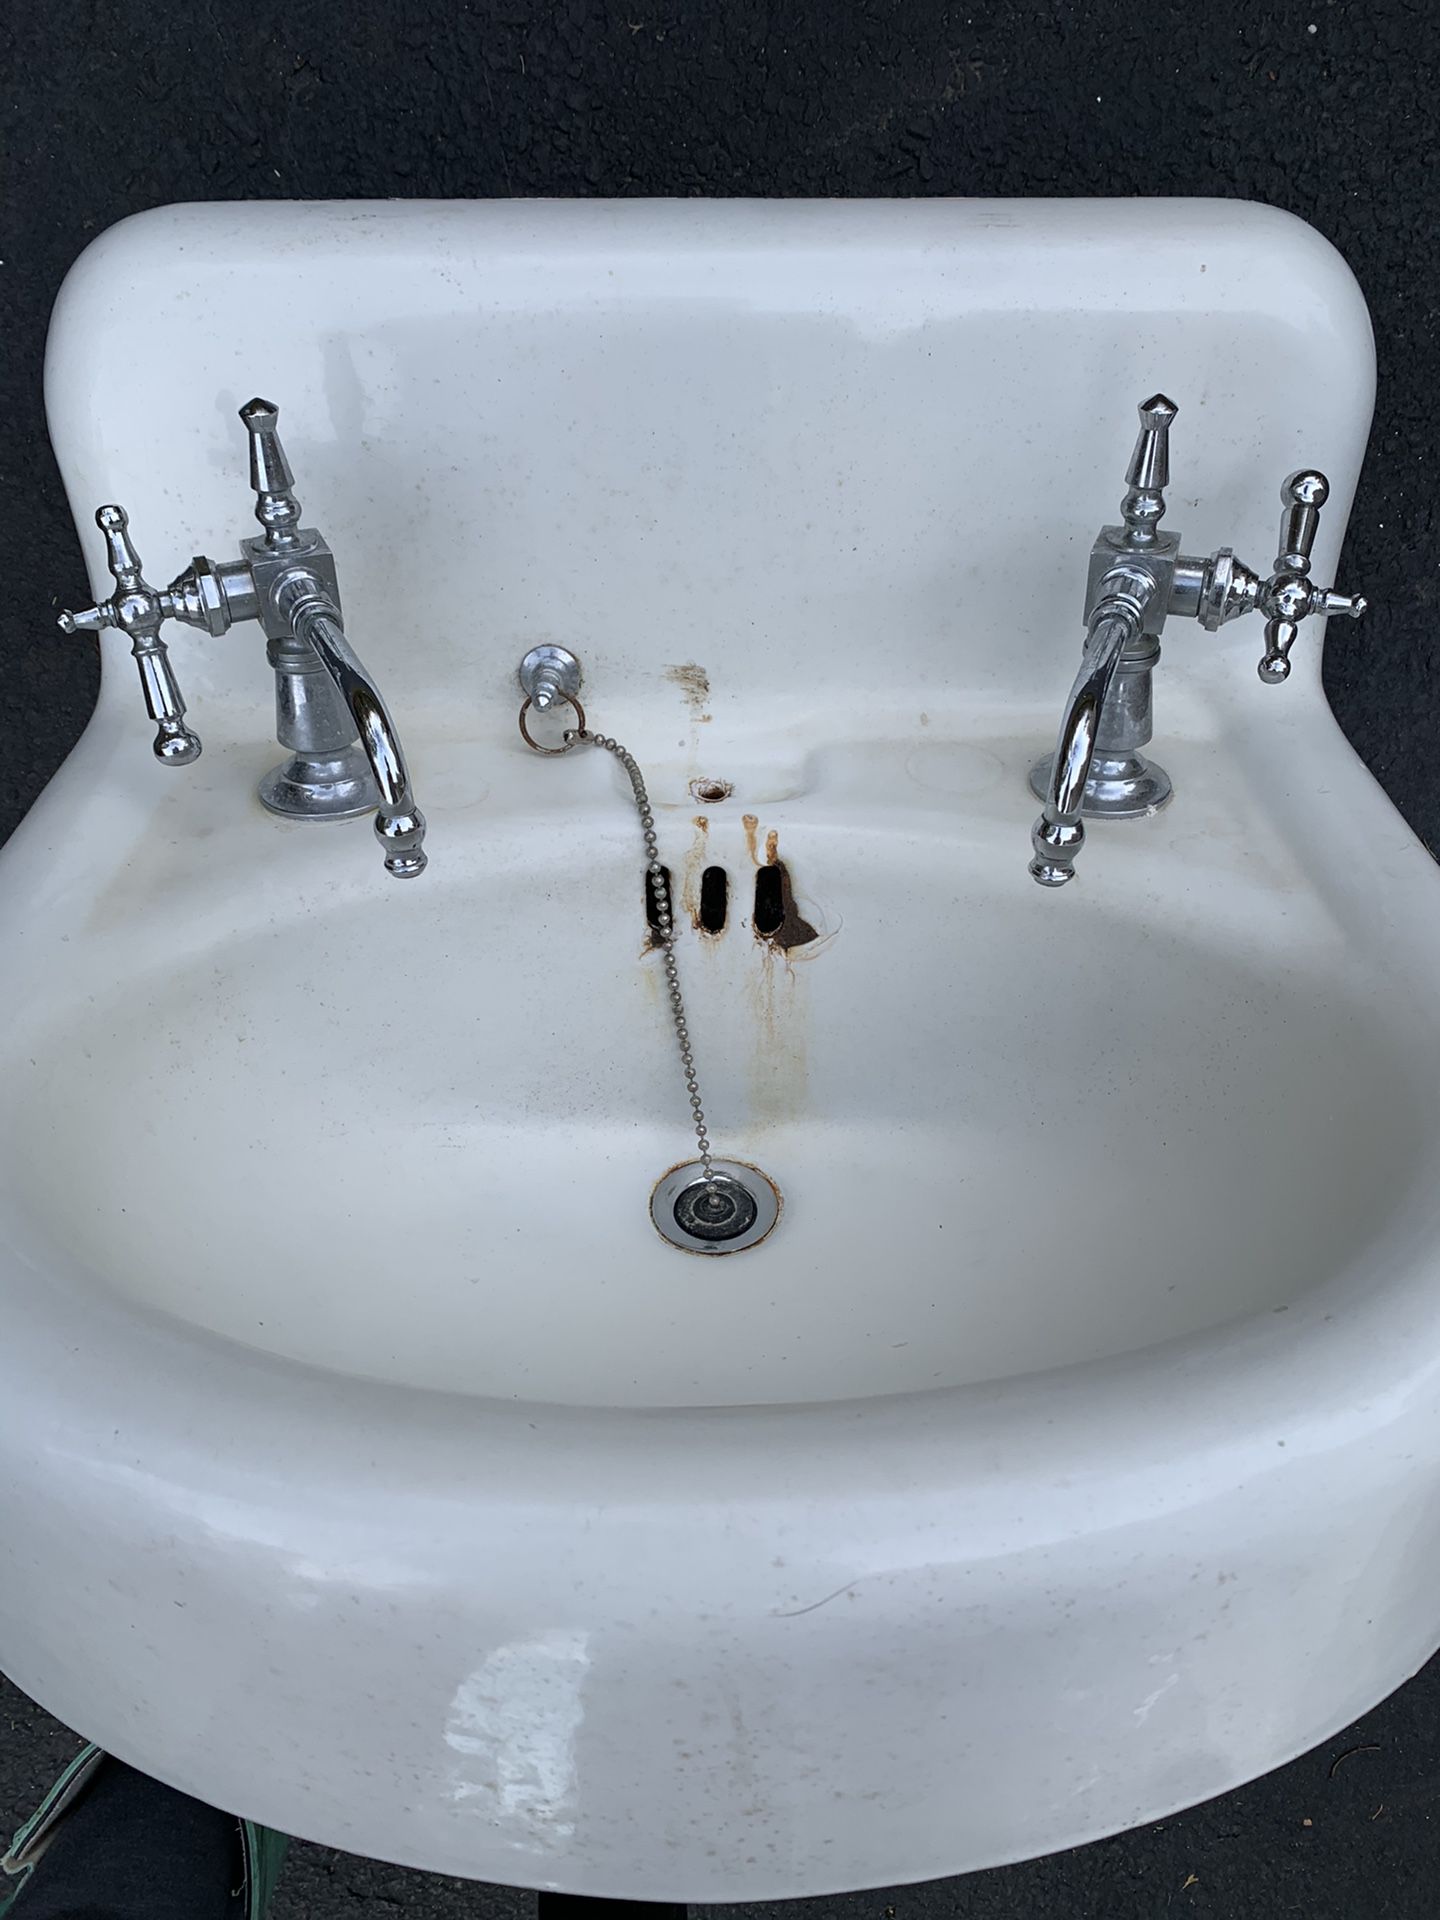 Vintage bathroom sink/Standard brand 1925